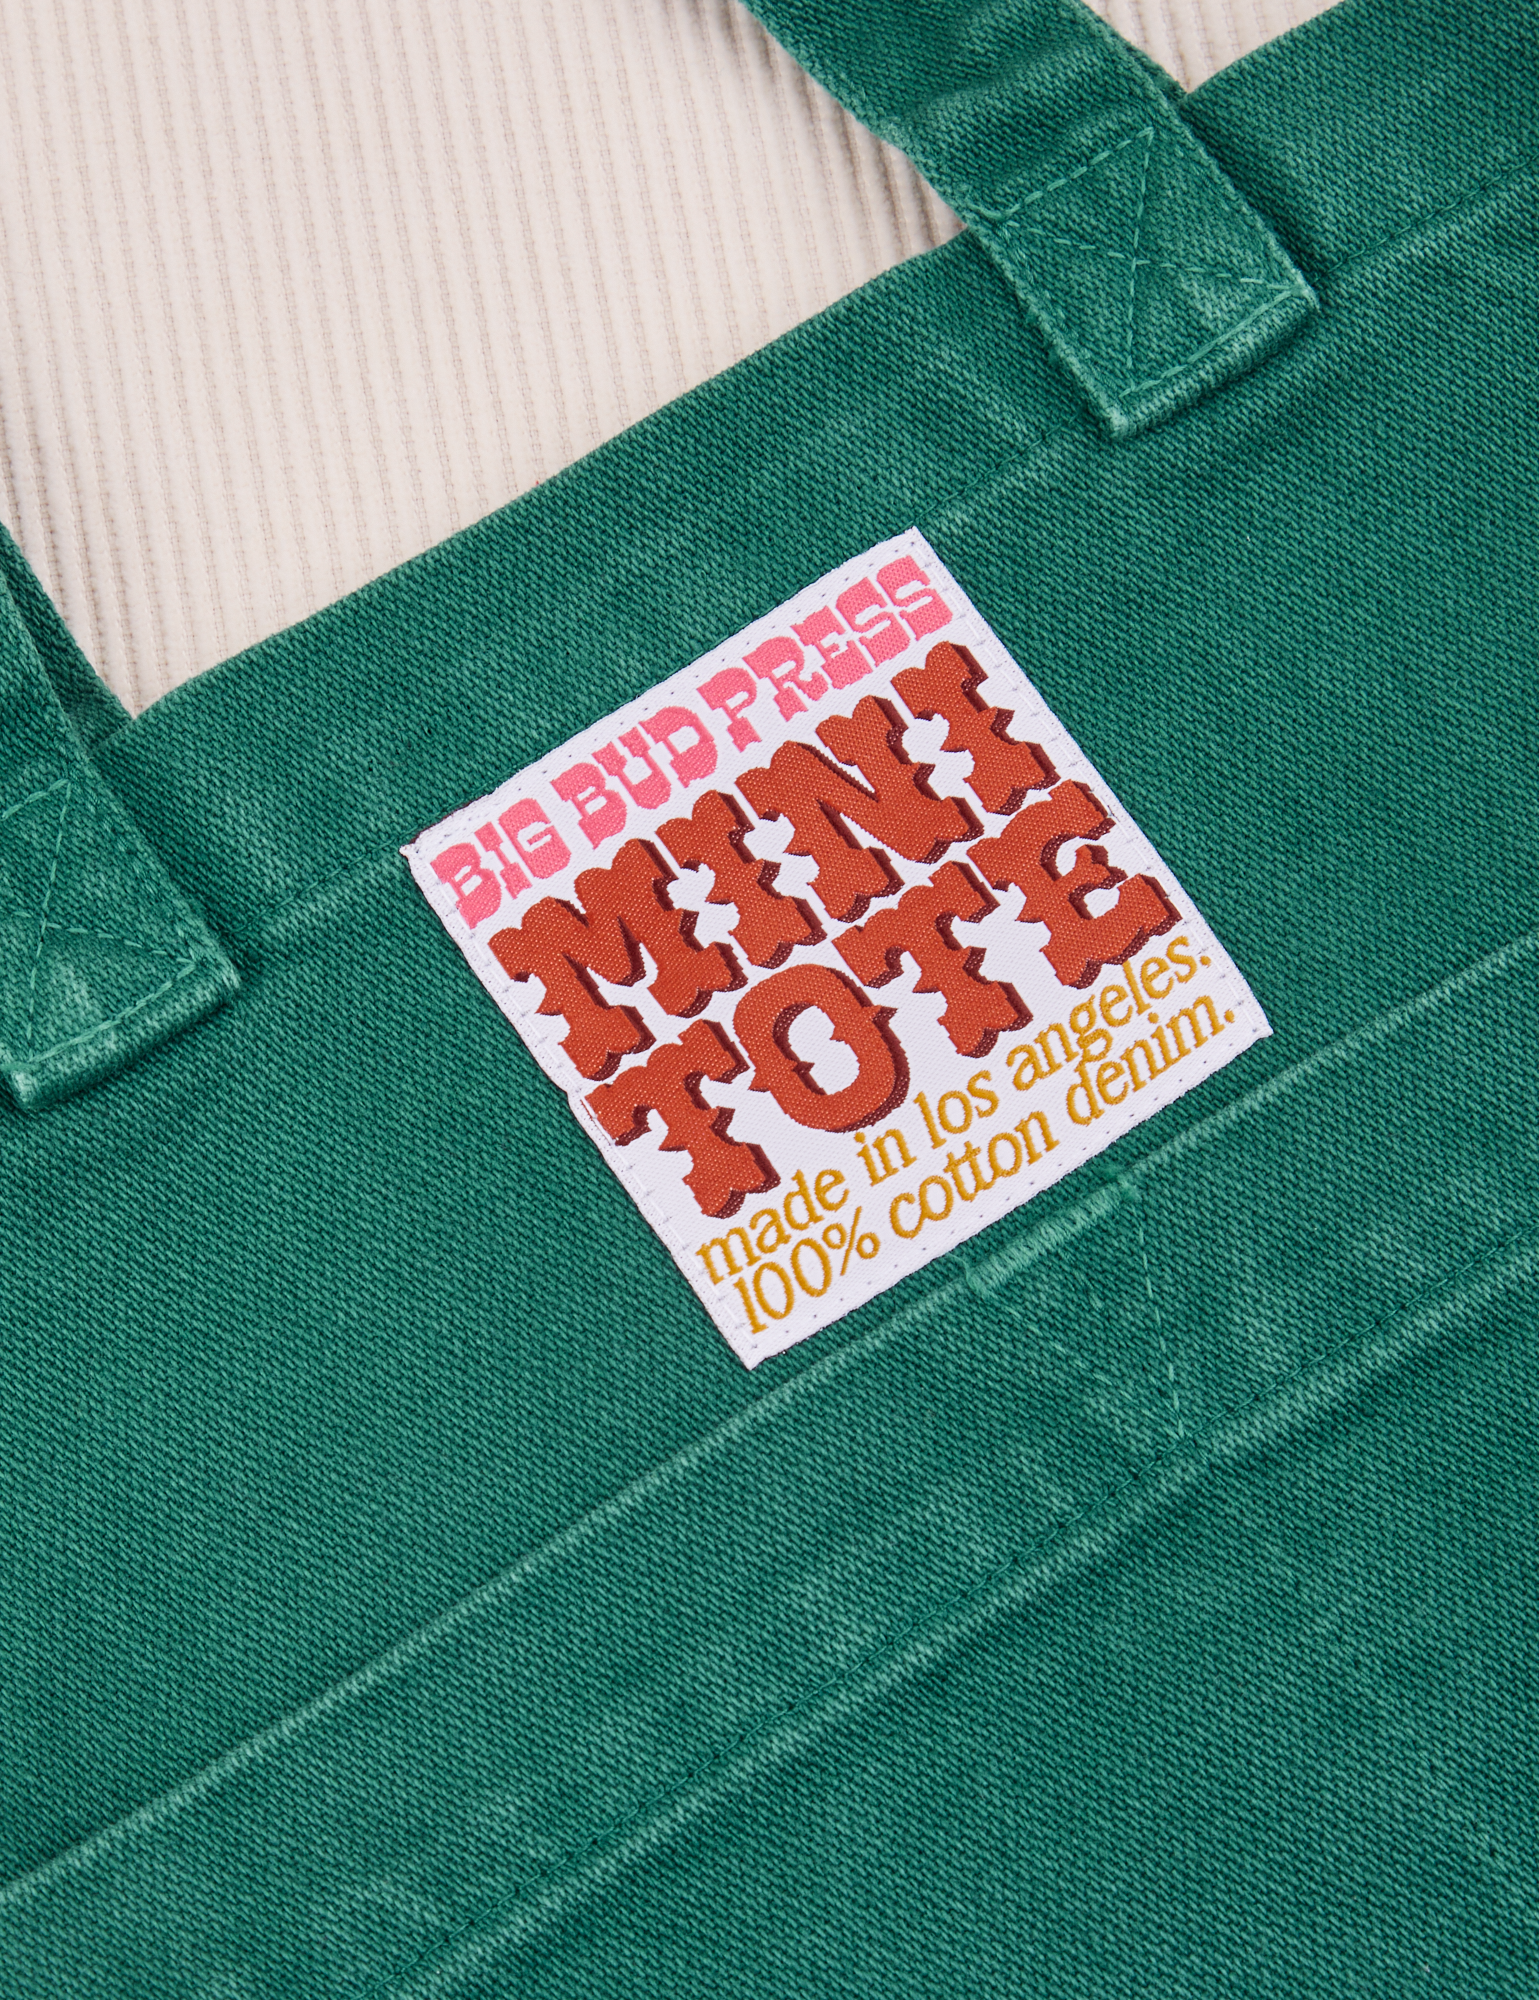 Mini Tote Bag in Hunter Green label close up